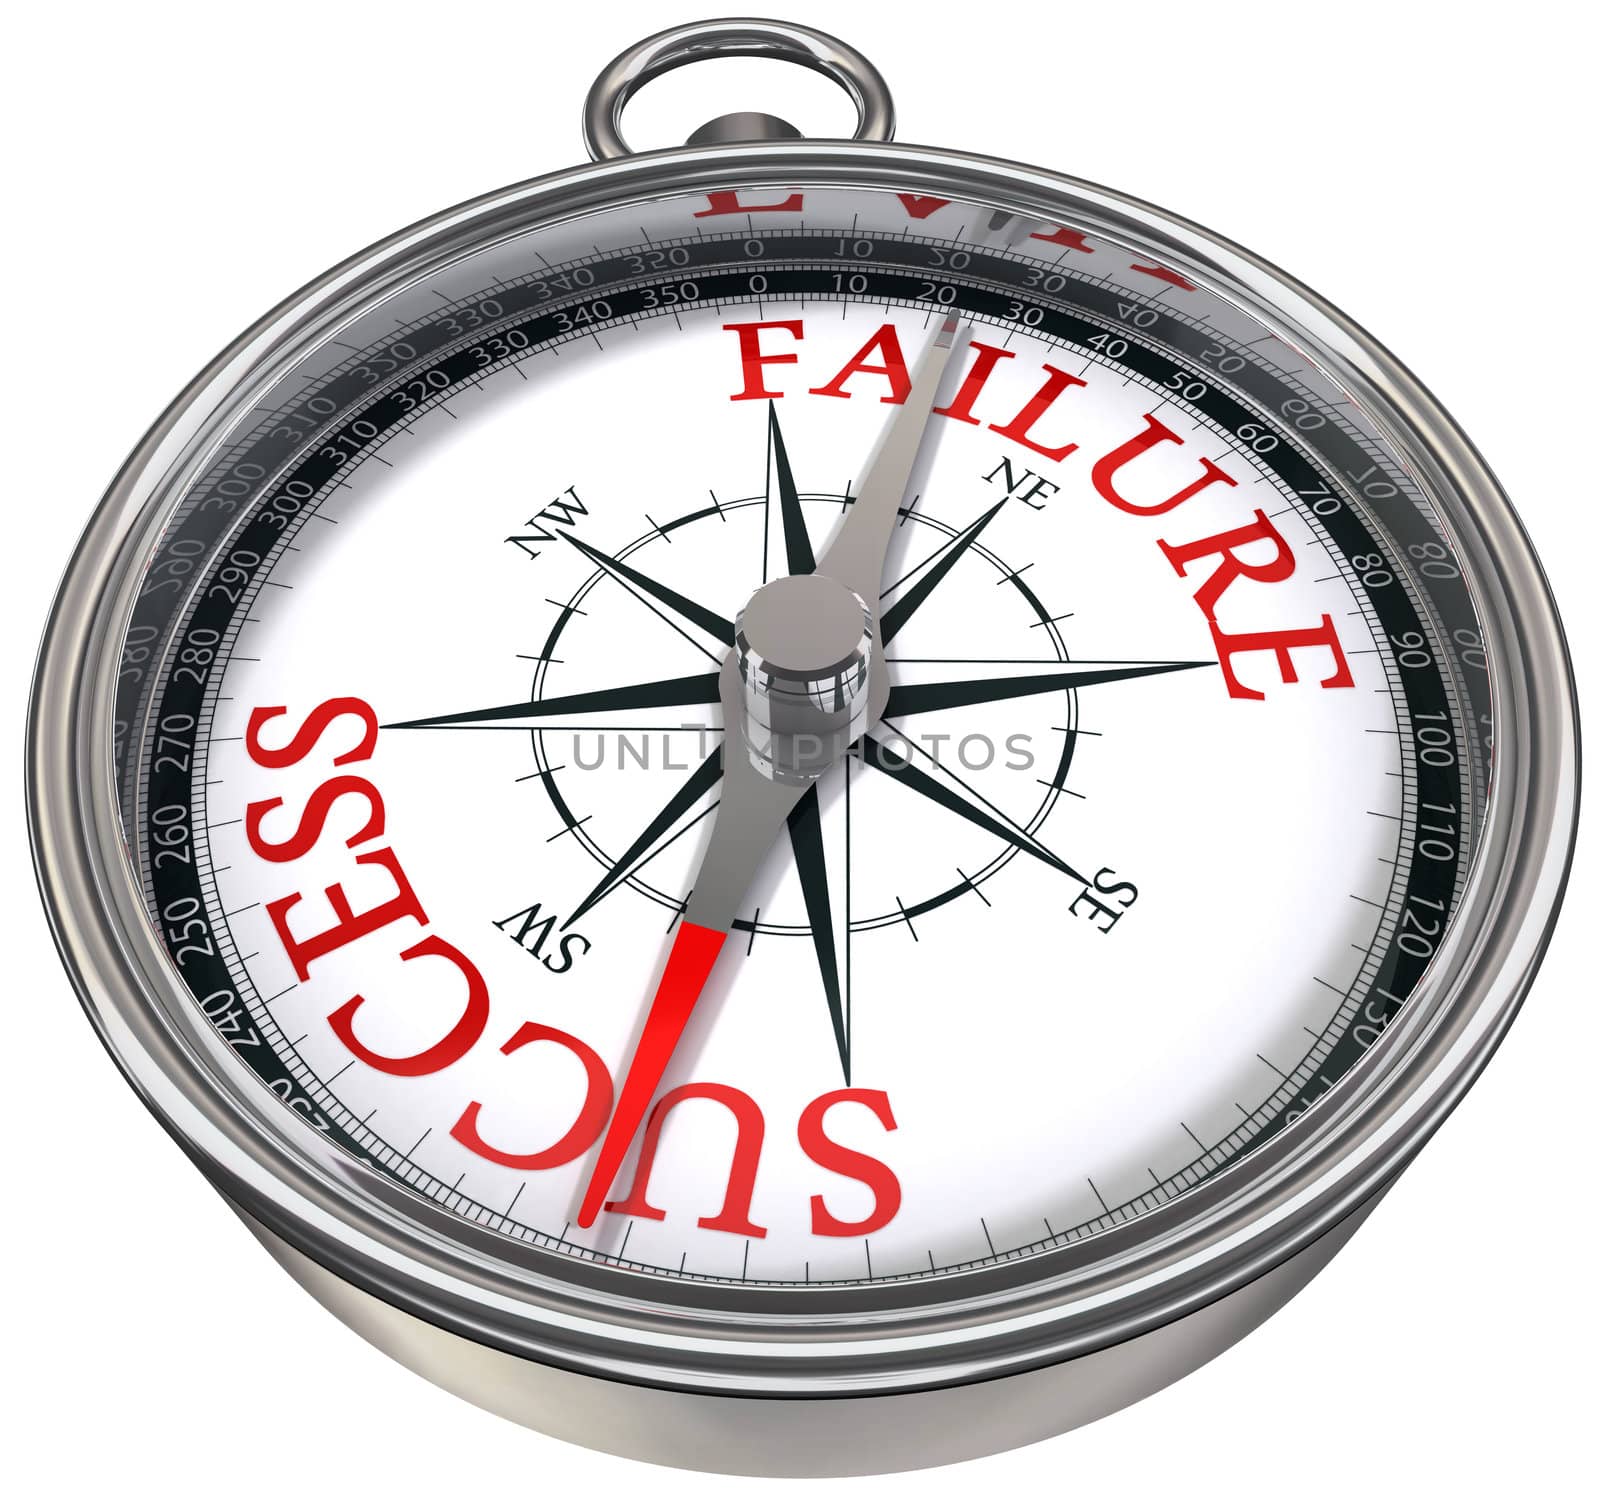 success versus failure words on compass, business conceptual image